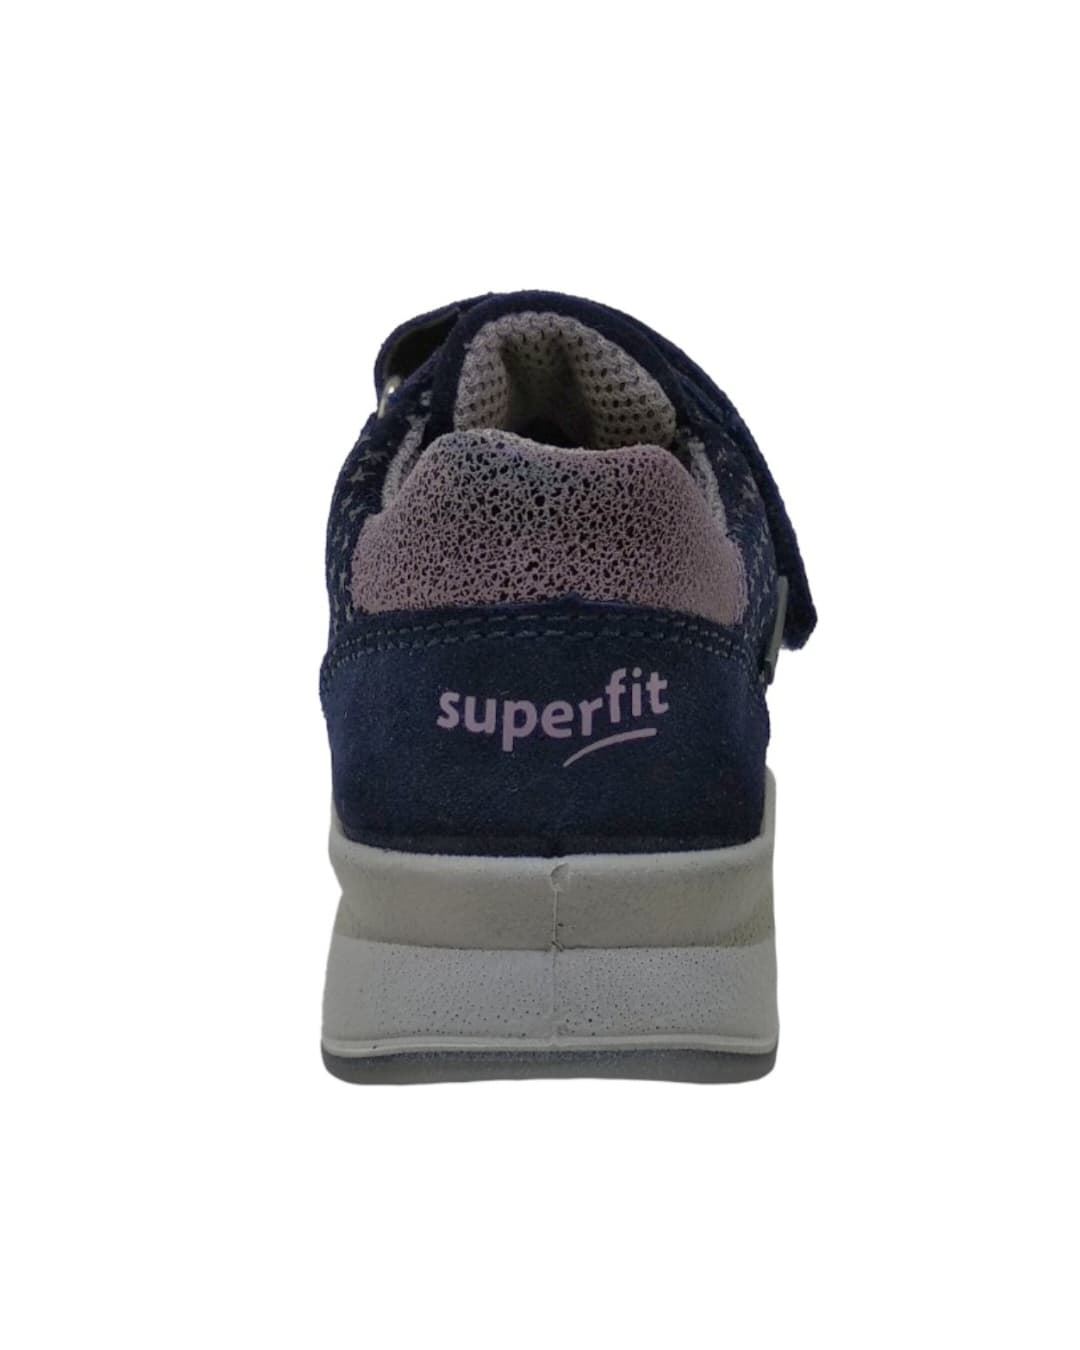 Superfit Gore-tex Girl's Sneakers Navy Blue - Image 3